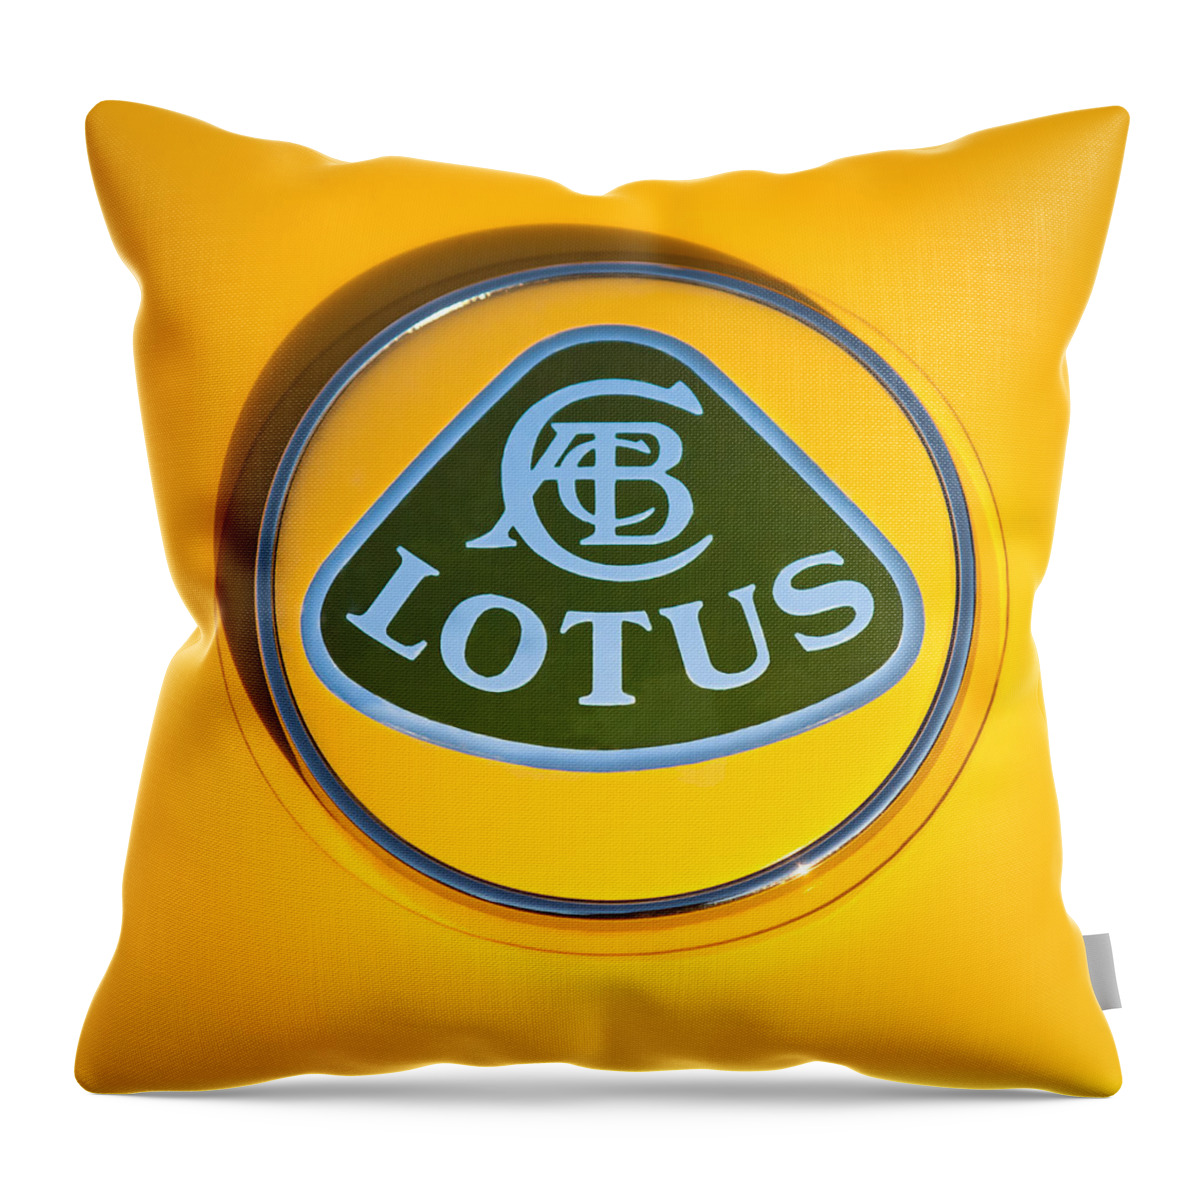 Lotus Emblem Throw Pillow featuring the photograph Lotus Emblem #2 by Jill Reger